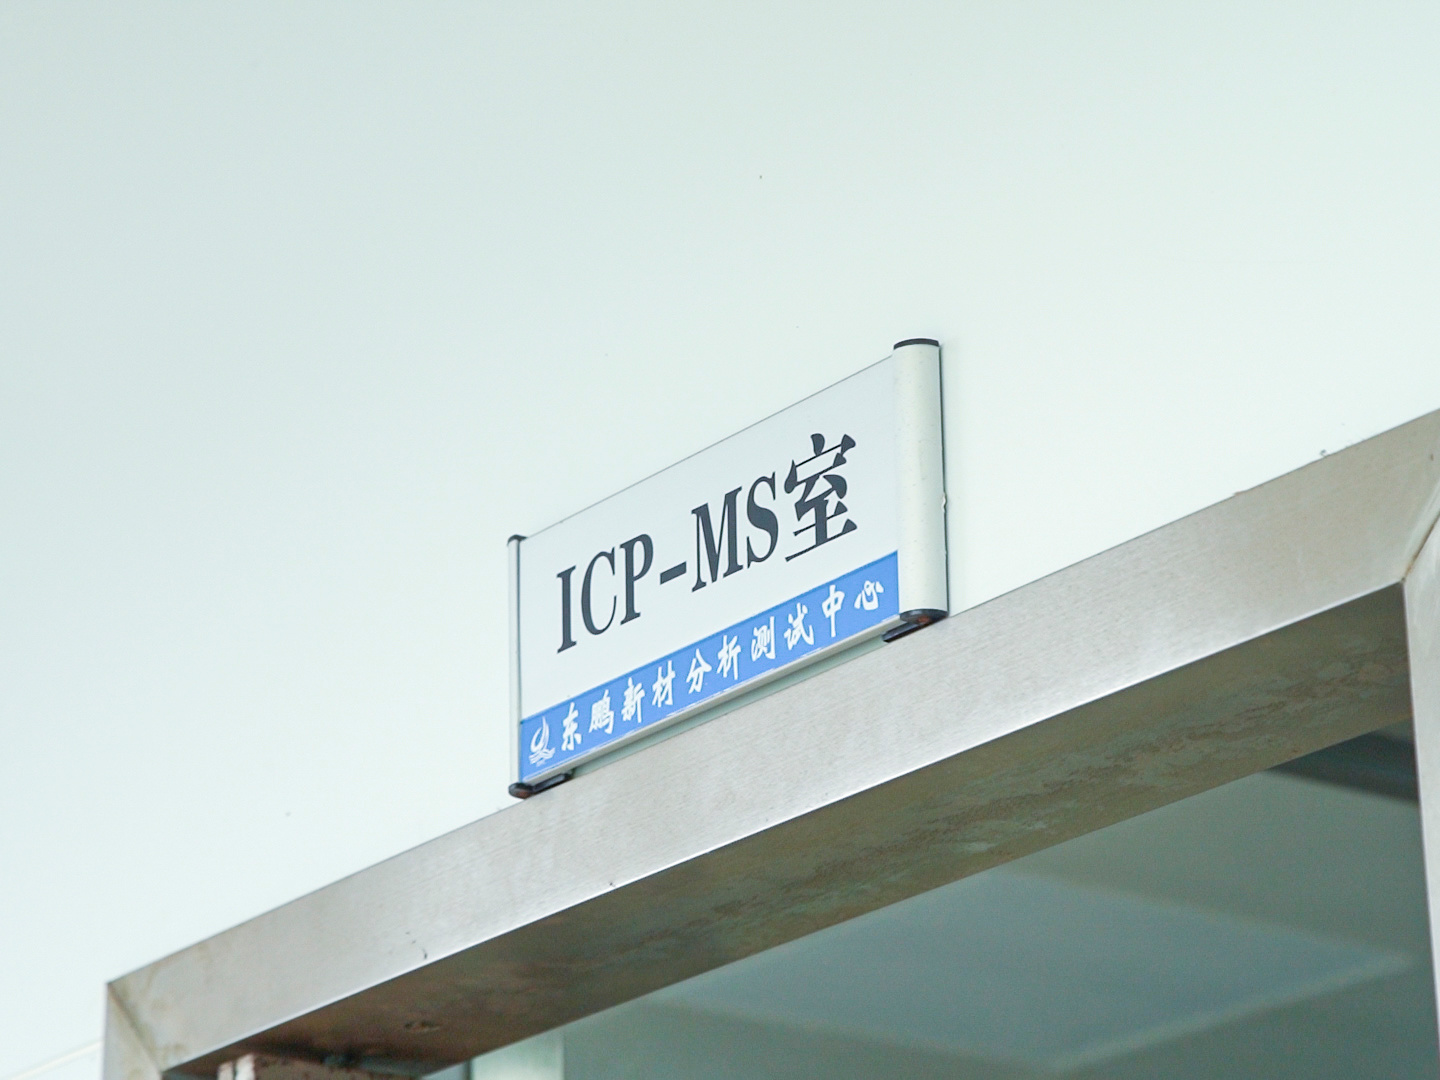 ICP-MS room